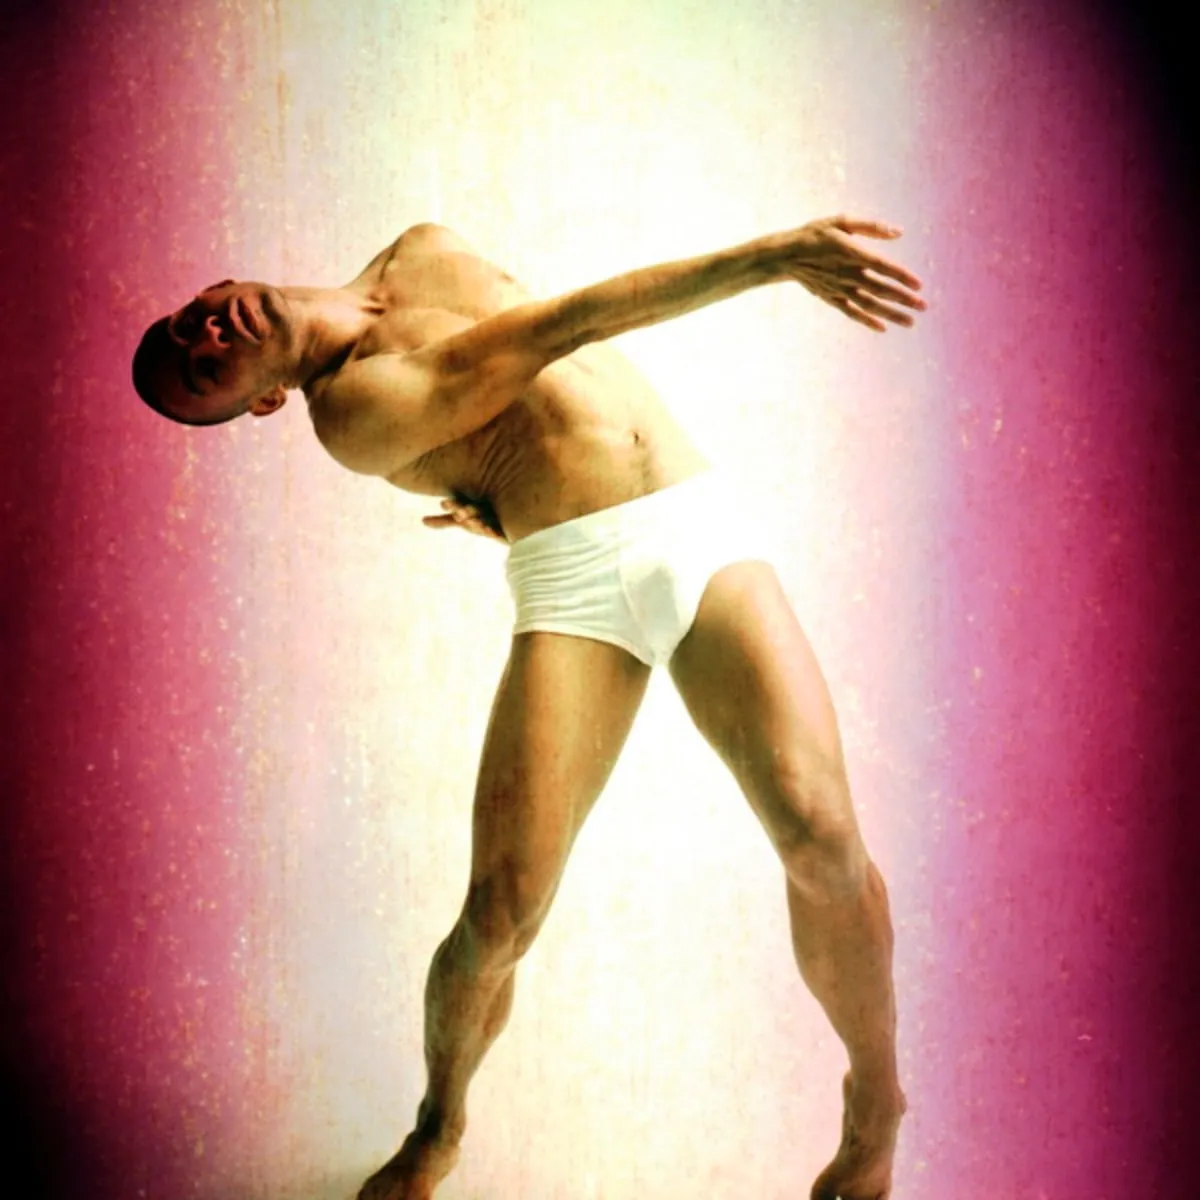 Dancer Nelson Reguera photo by Attila Glázer